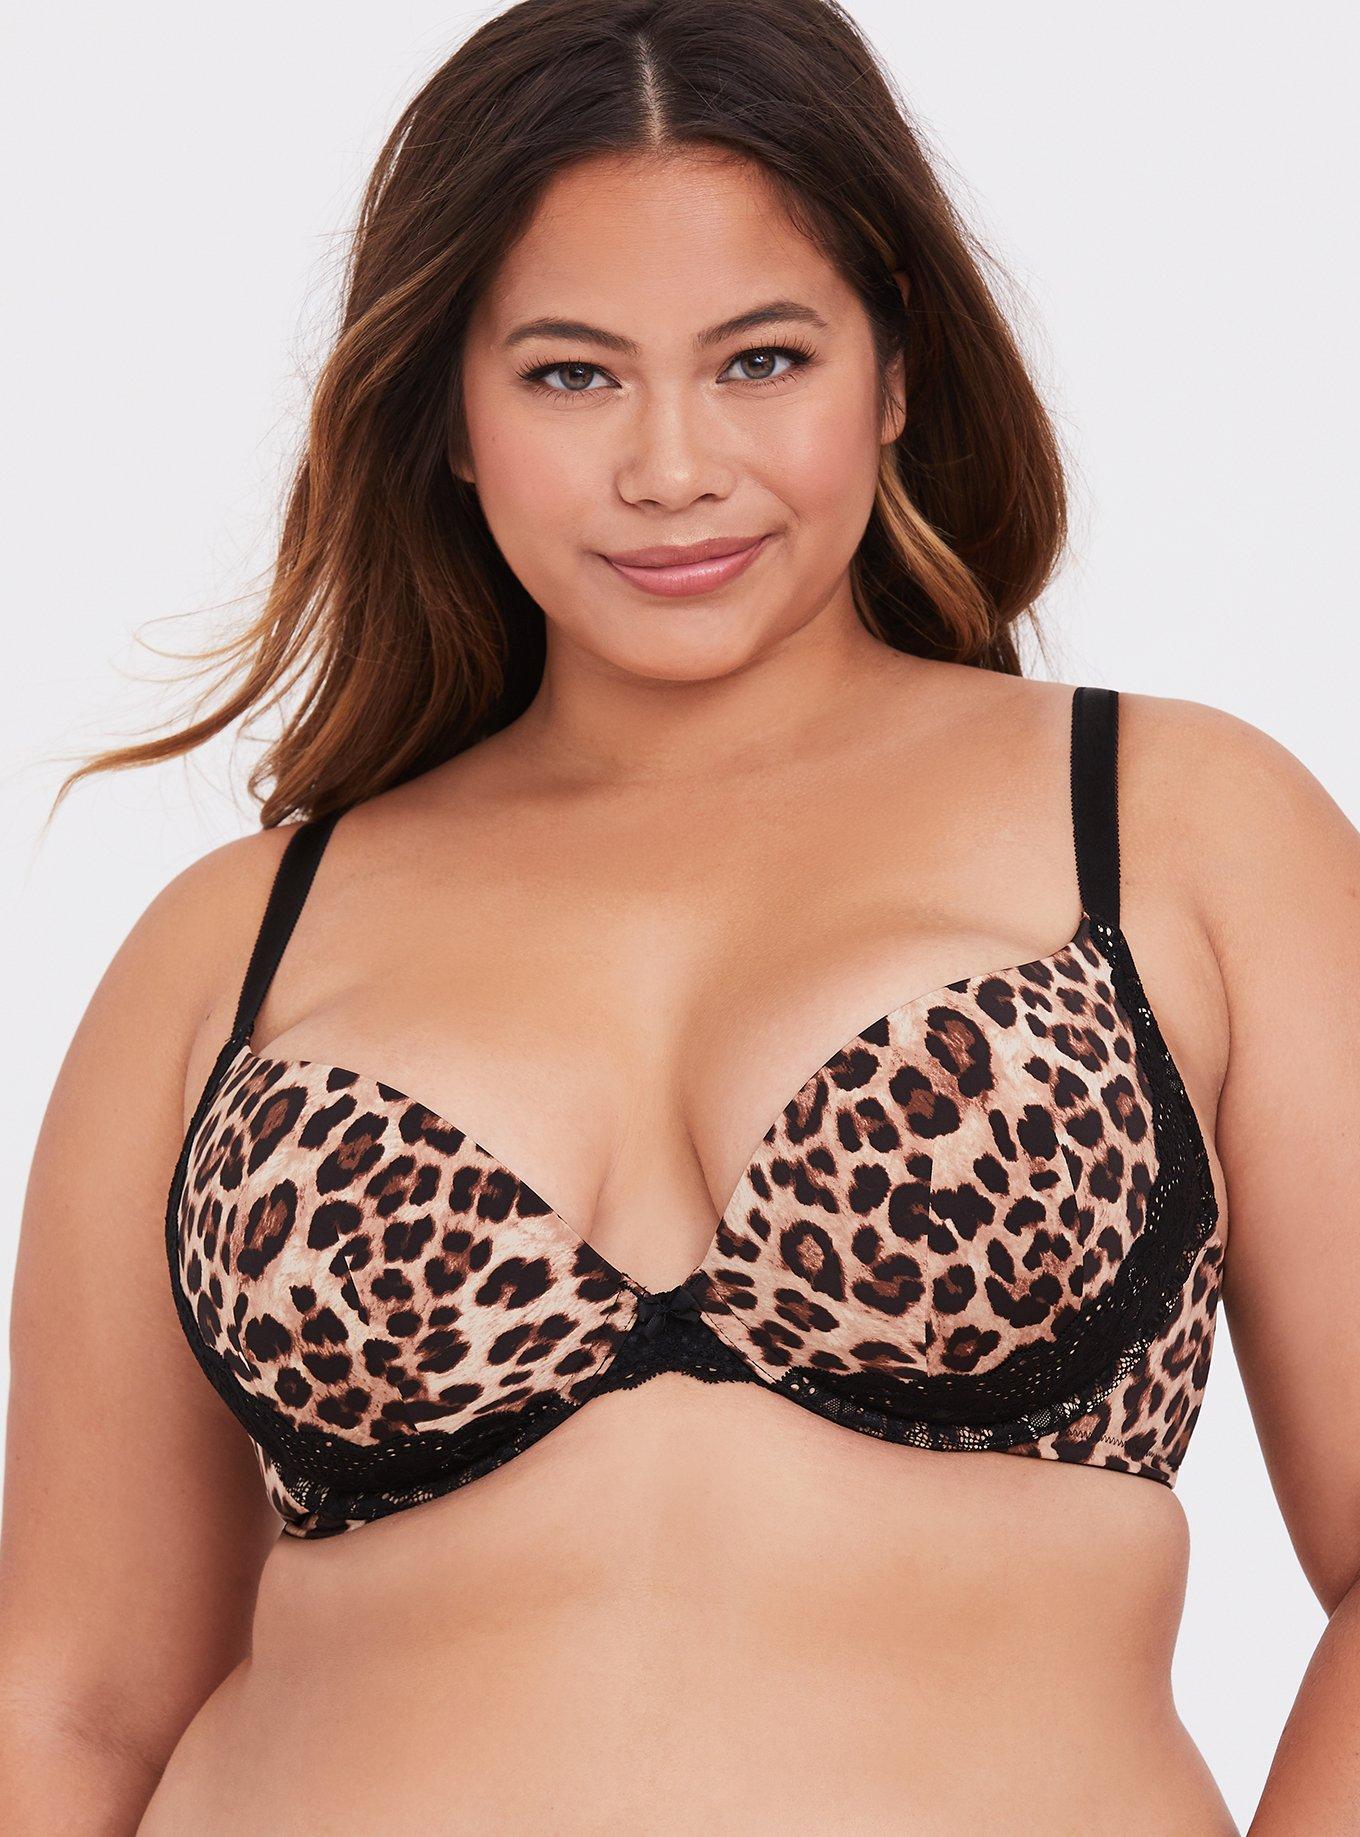 Lace push-up bra - Black/Leopard print - Ladies